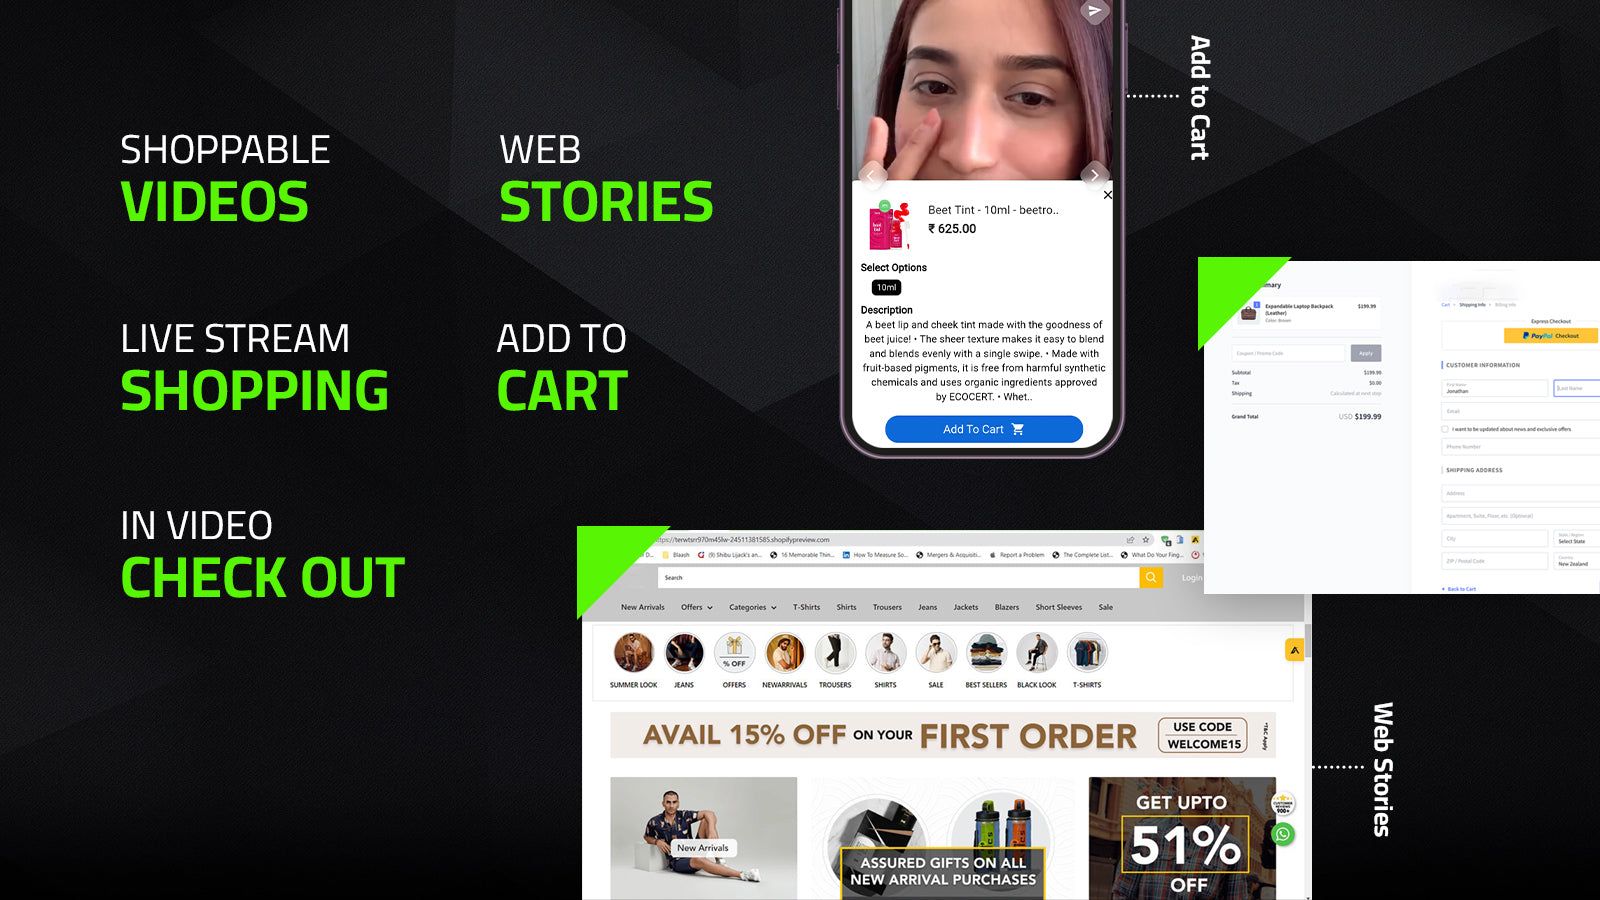 Shoppable Videos, Web Stories & Live Stream Shopping